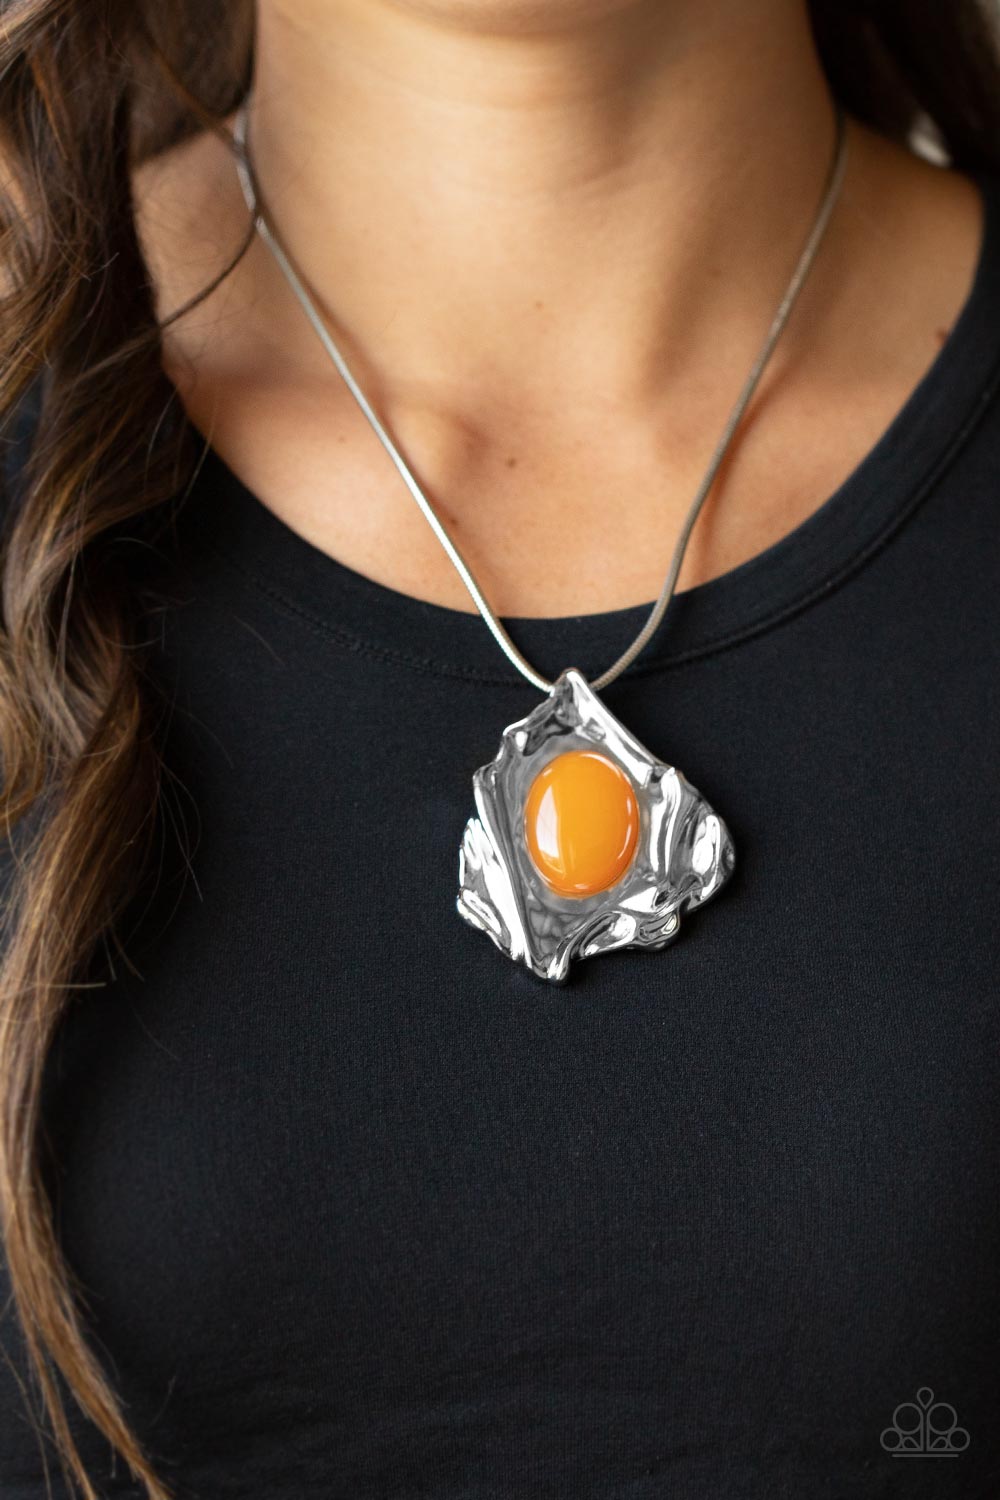 PRE-ORDER - Paparazzi Amazon Amulet - Orange - Necklace & Earrings - $5 Jewelry with Ashley Swint